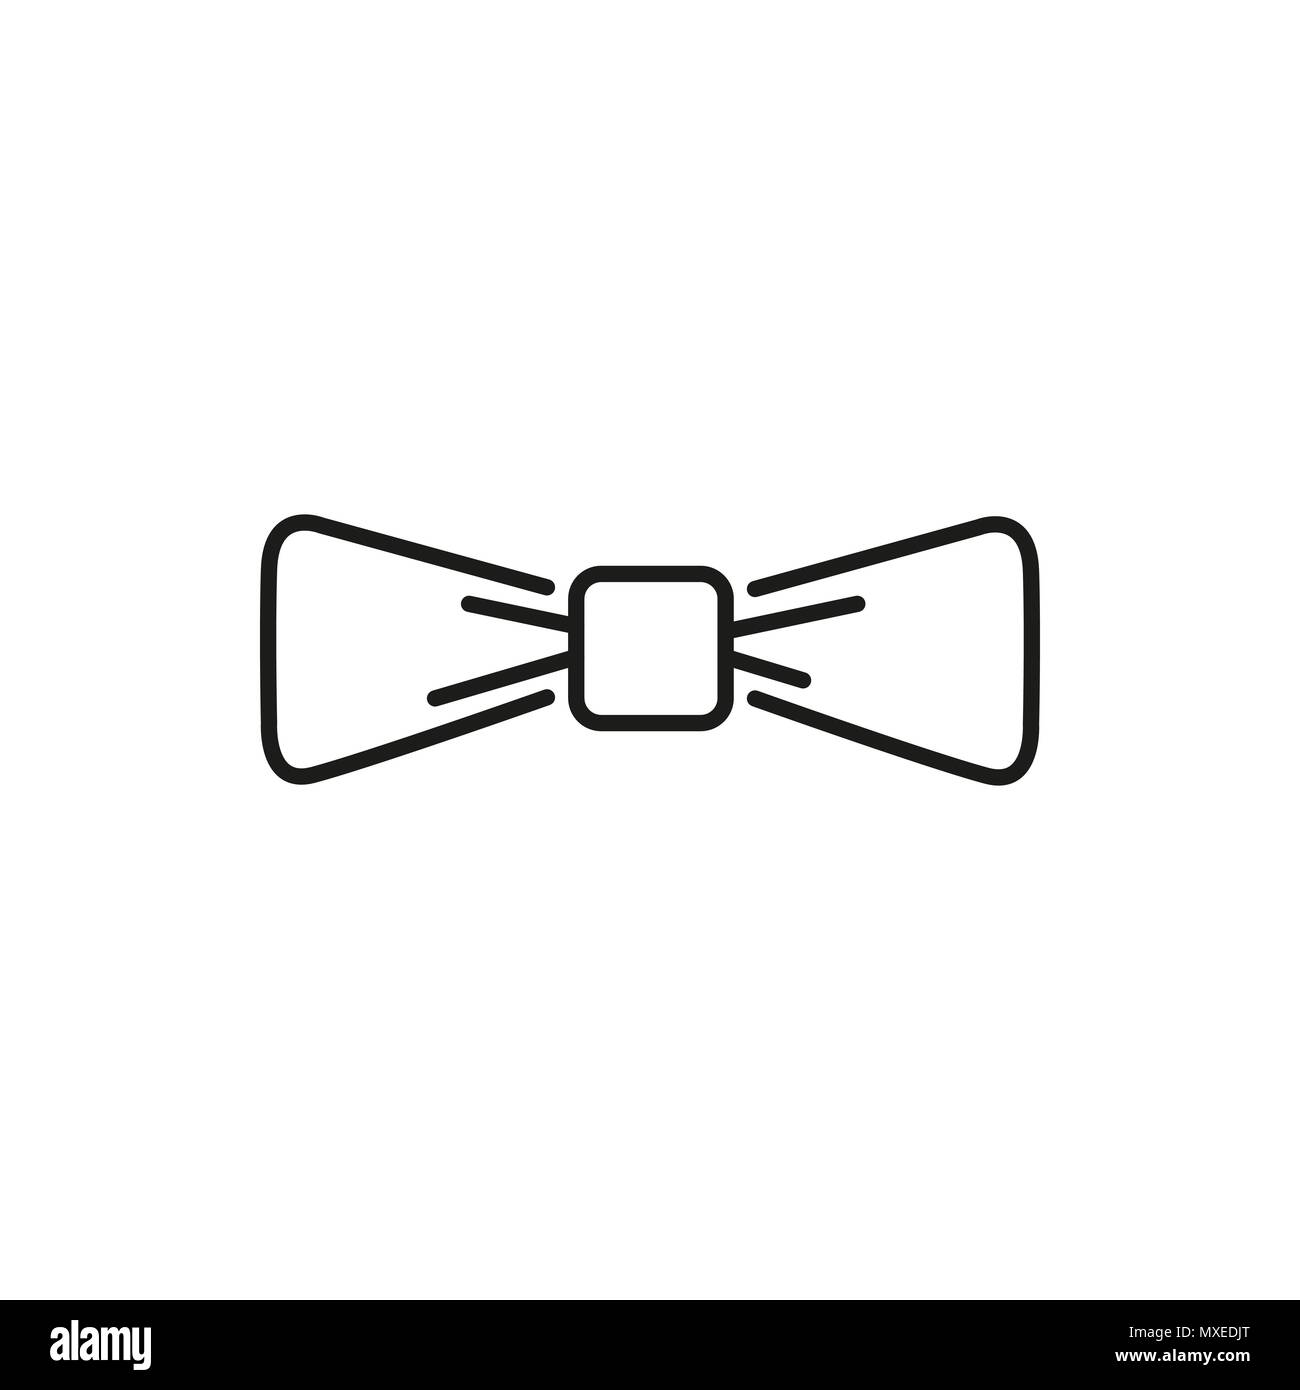 bow tie vector illustration